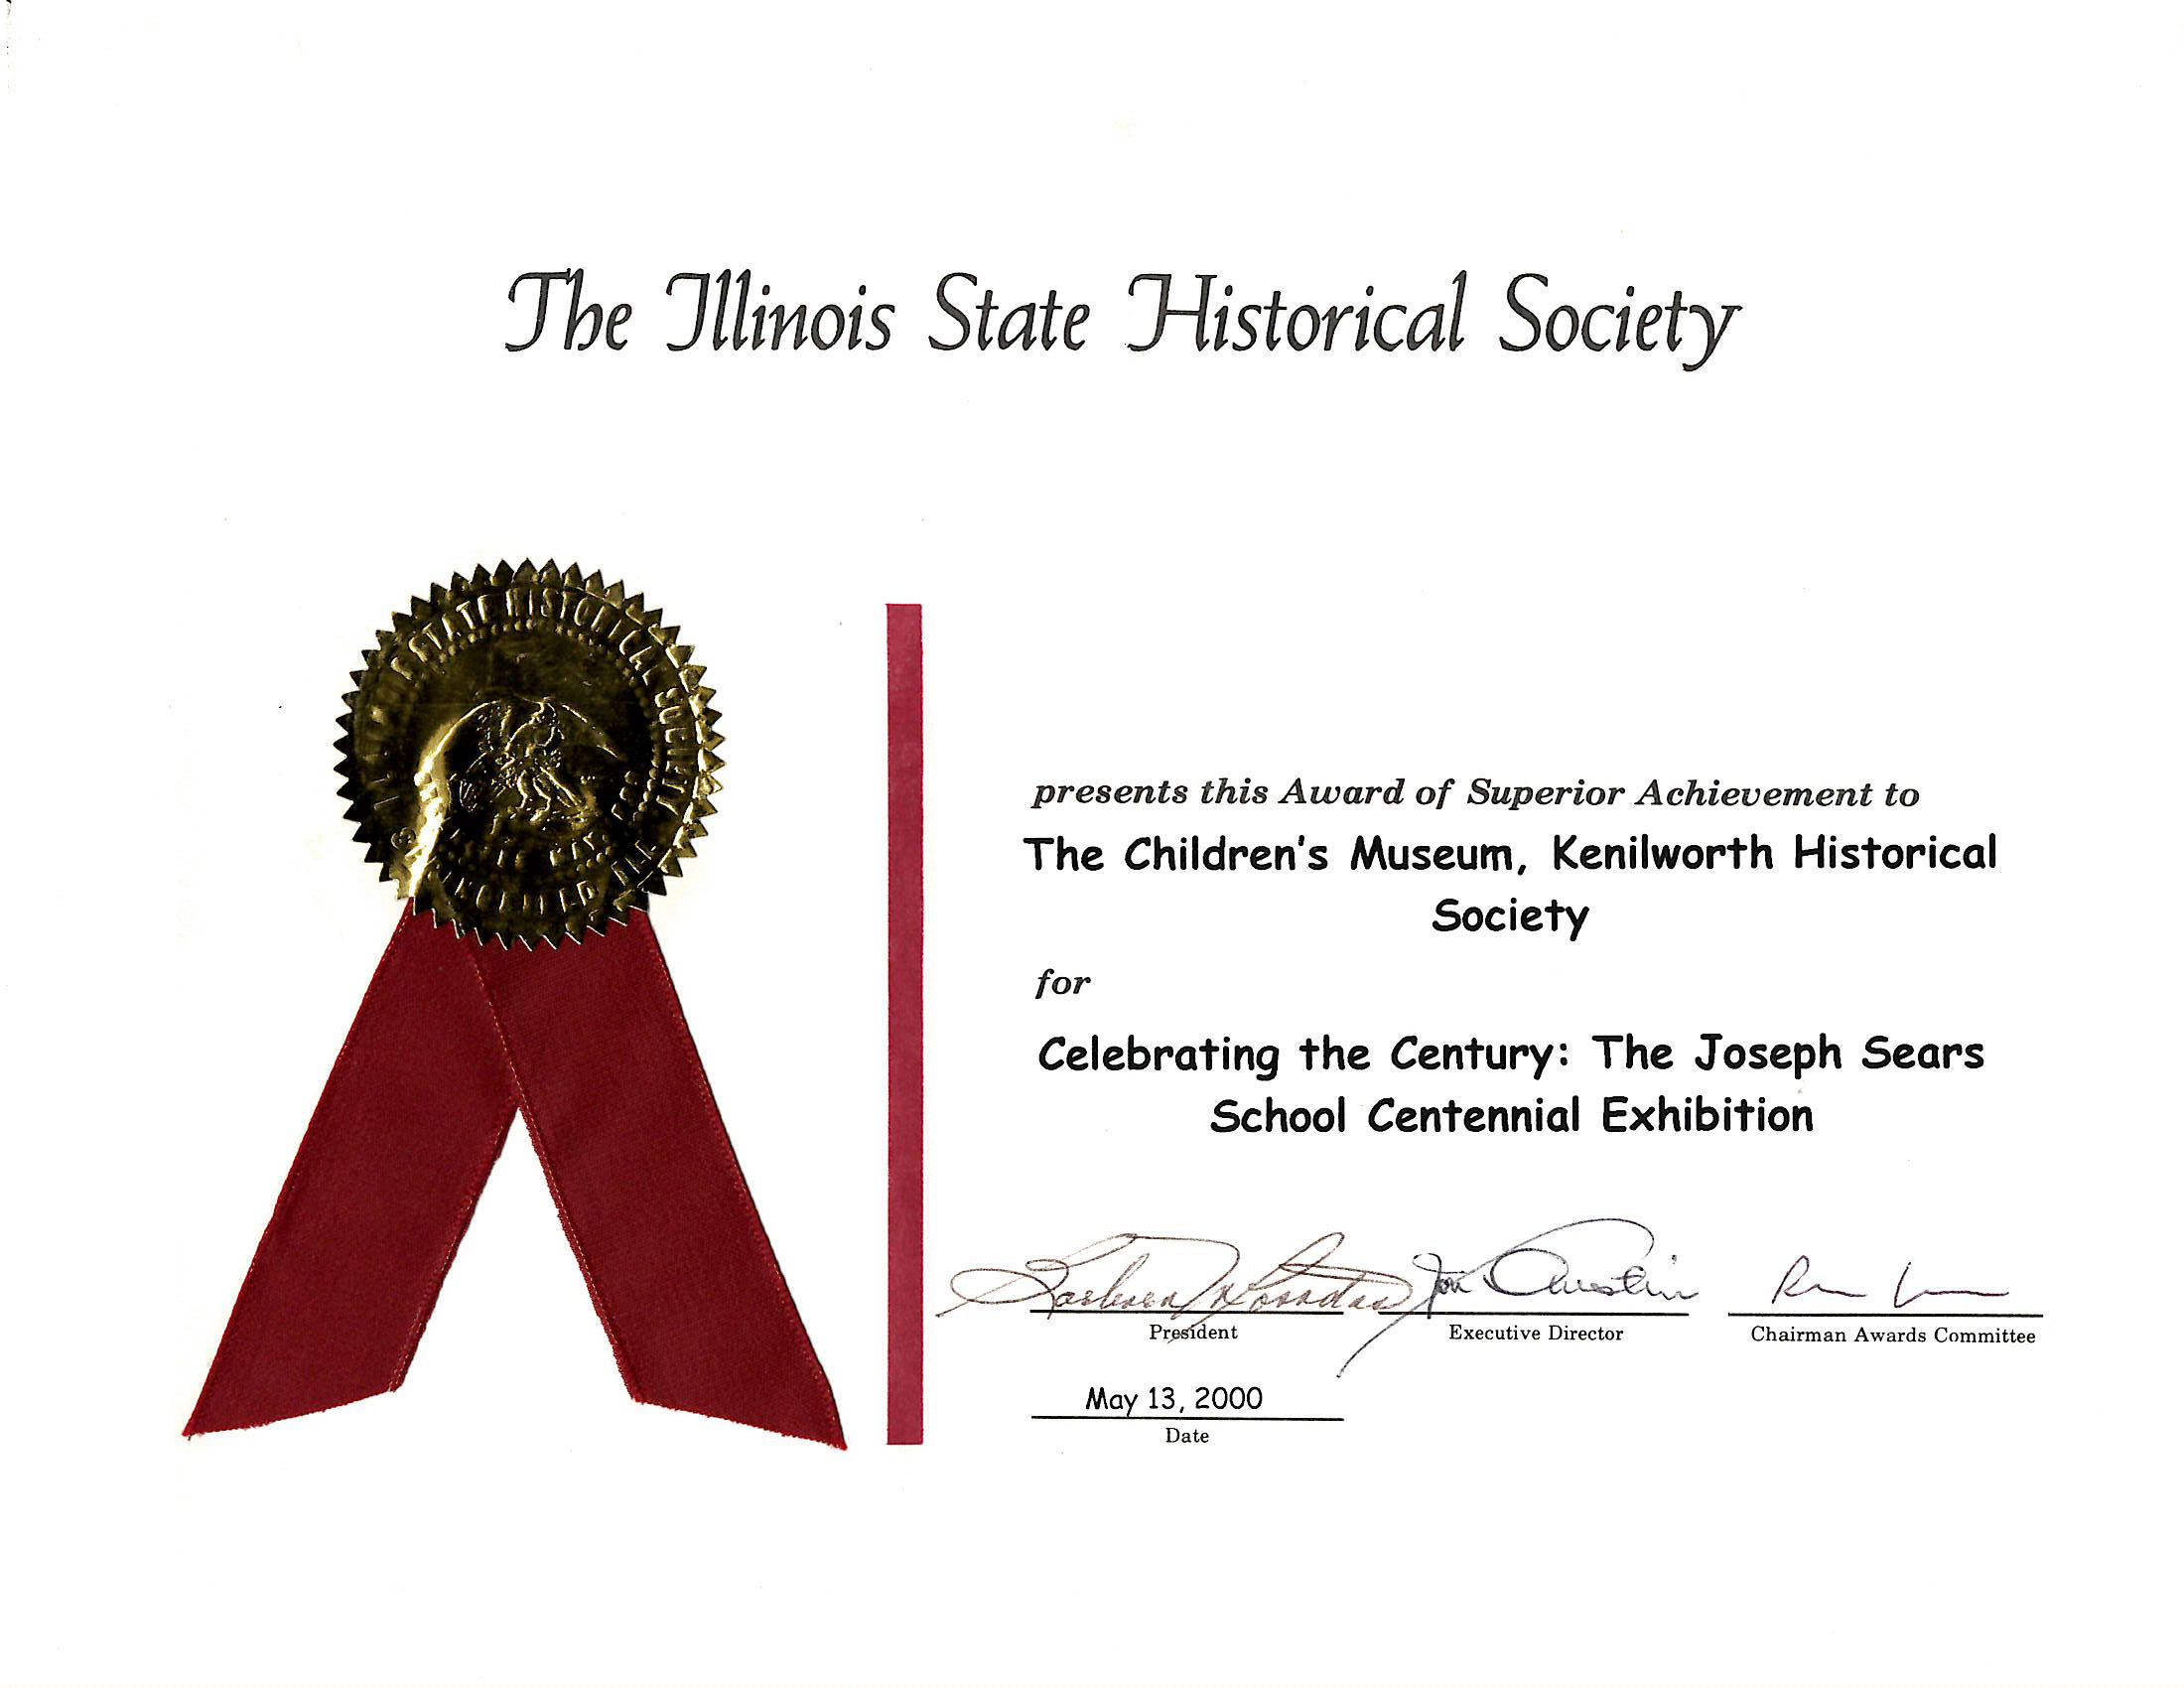 ISHS – Celebrating the Century: The Joseph Sears School Centennial Exhibition